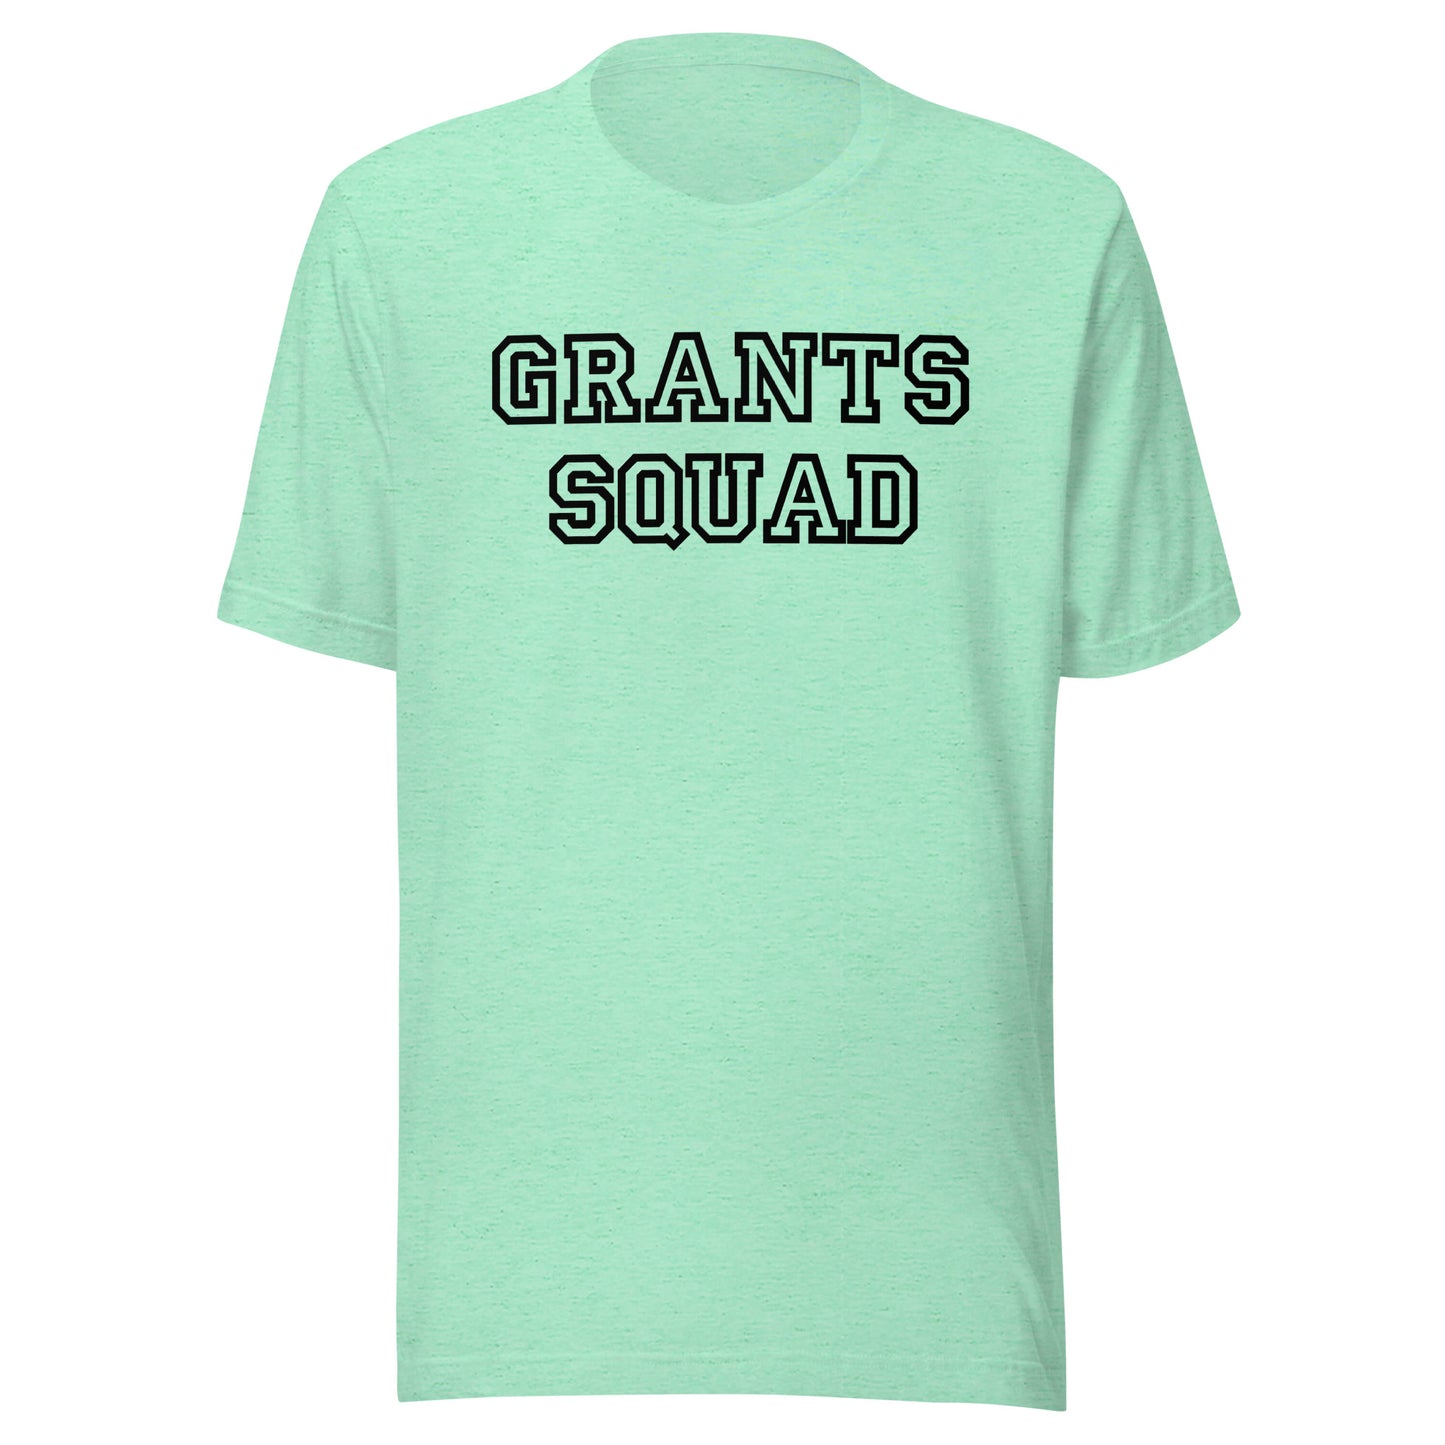 Grants Squad light Unisex t-shirt